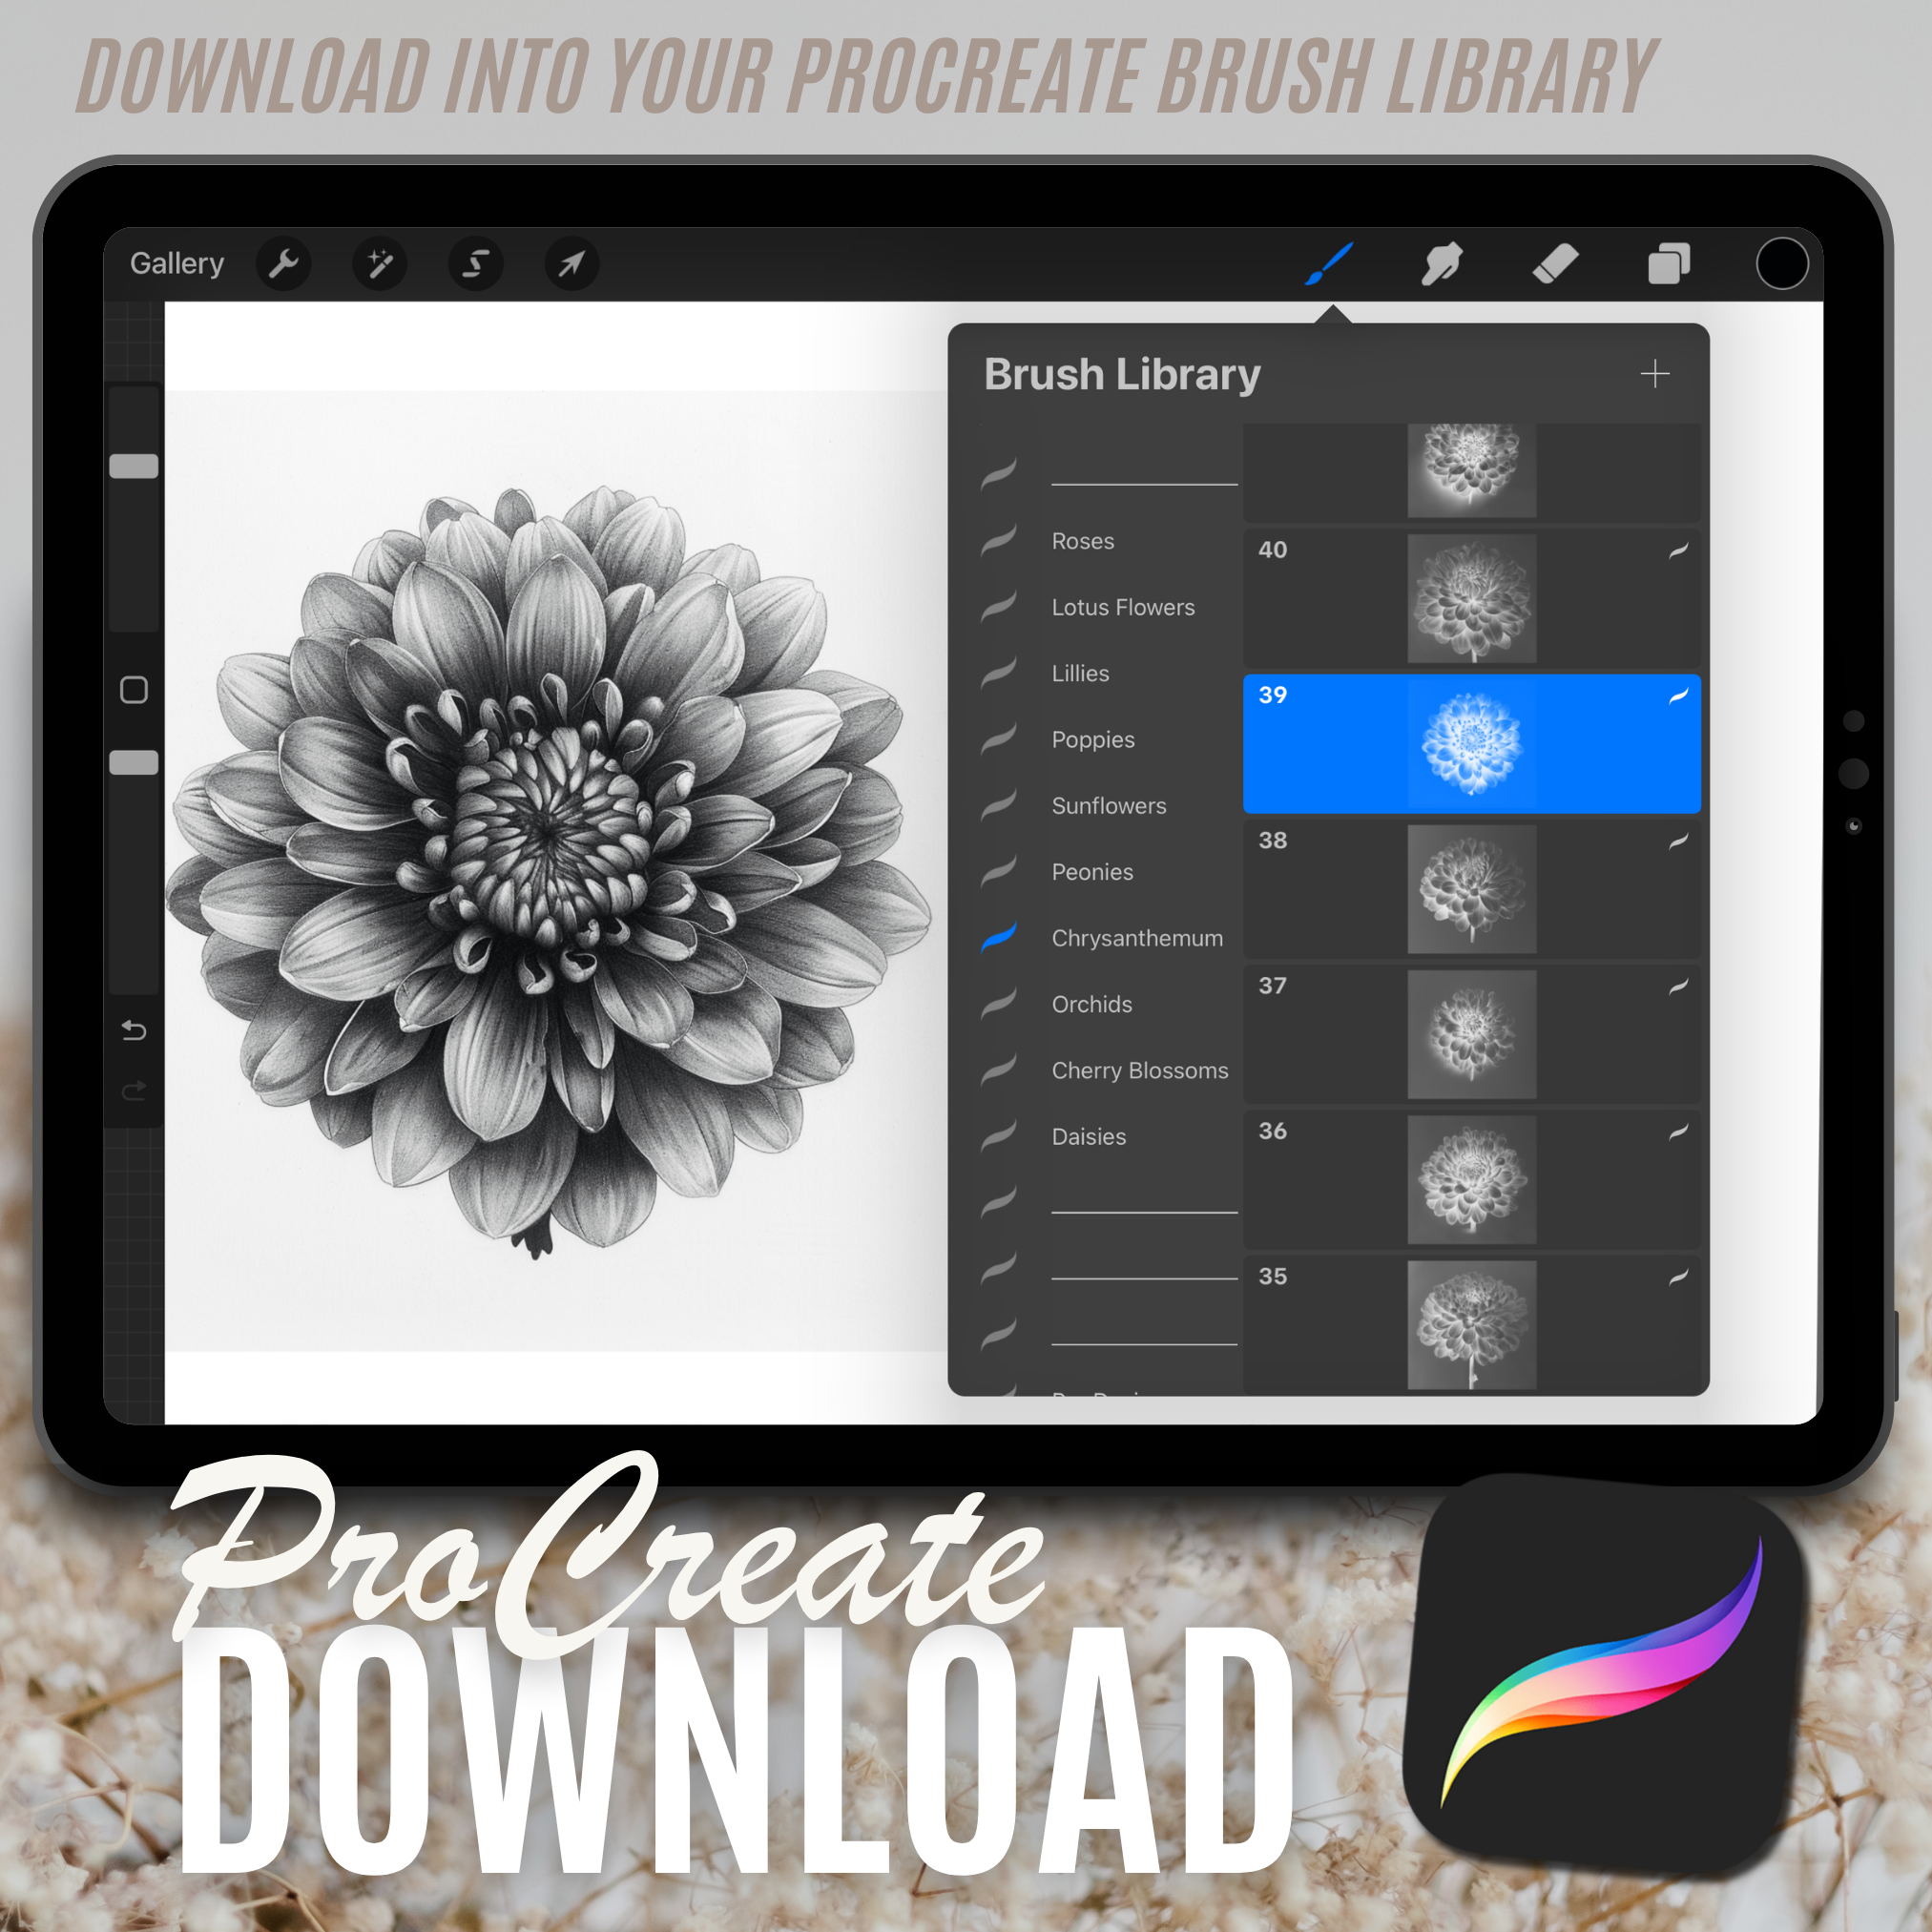 Chrysanthemums Digital Design Collection: 50 Procreate & Sketchbook Images